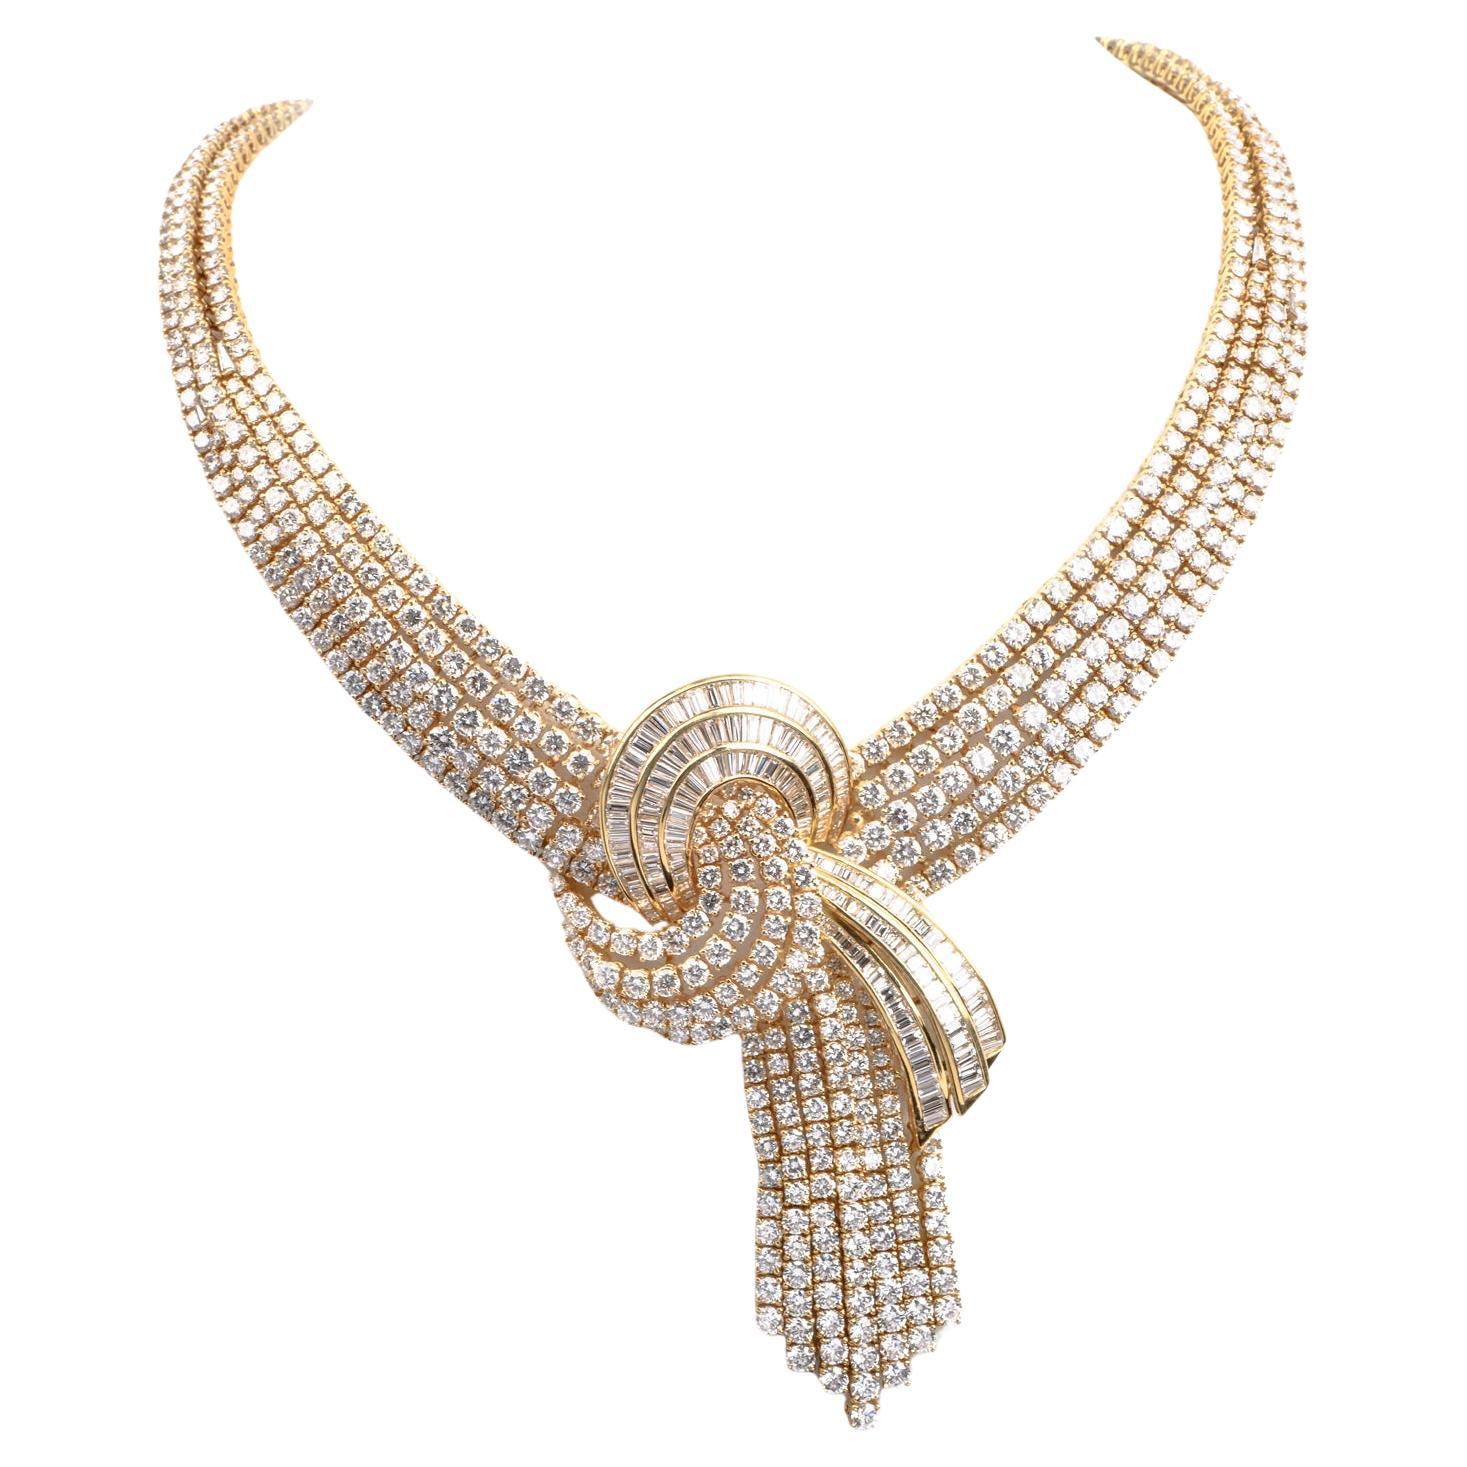  Capri 122.50 carats Diamond Scarf Knot 18K Statement Necklace  For Sale